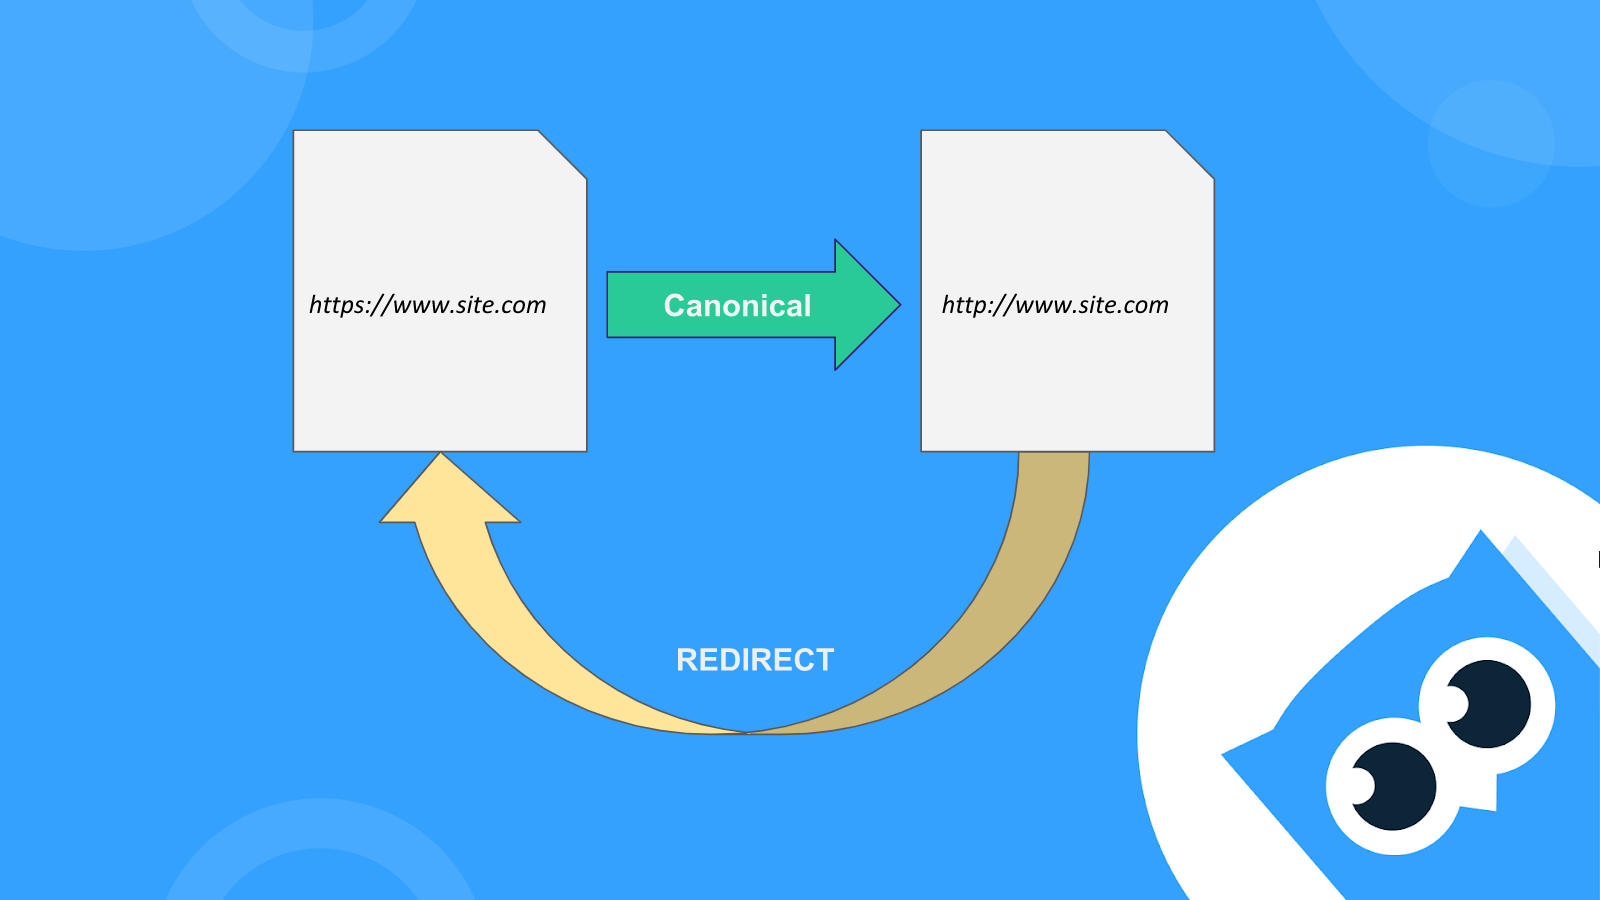 Redirect loop